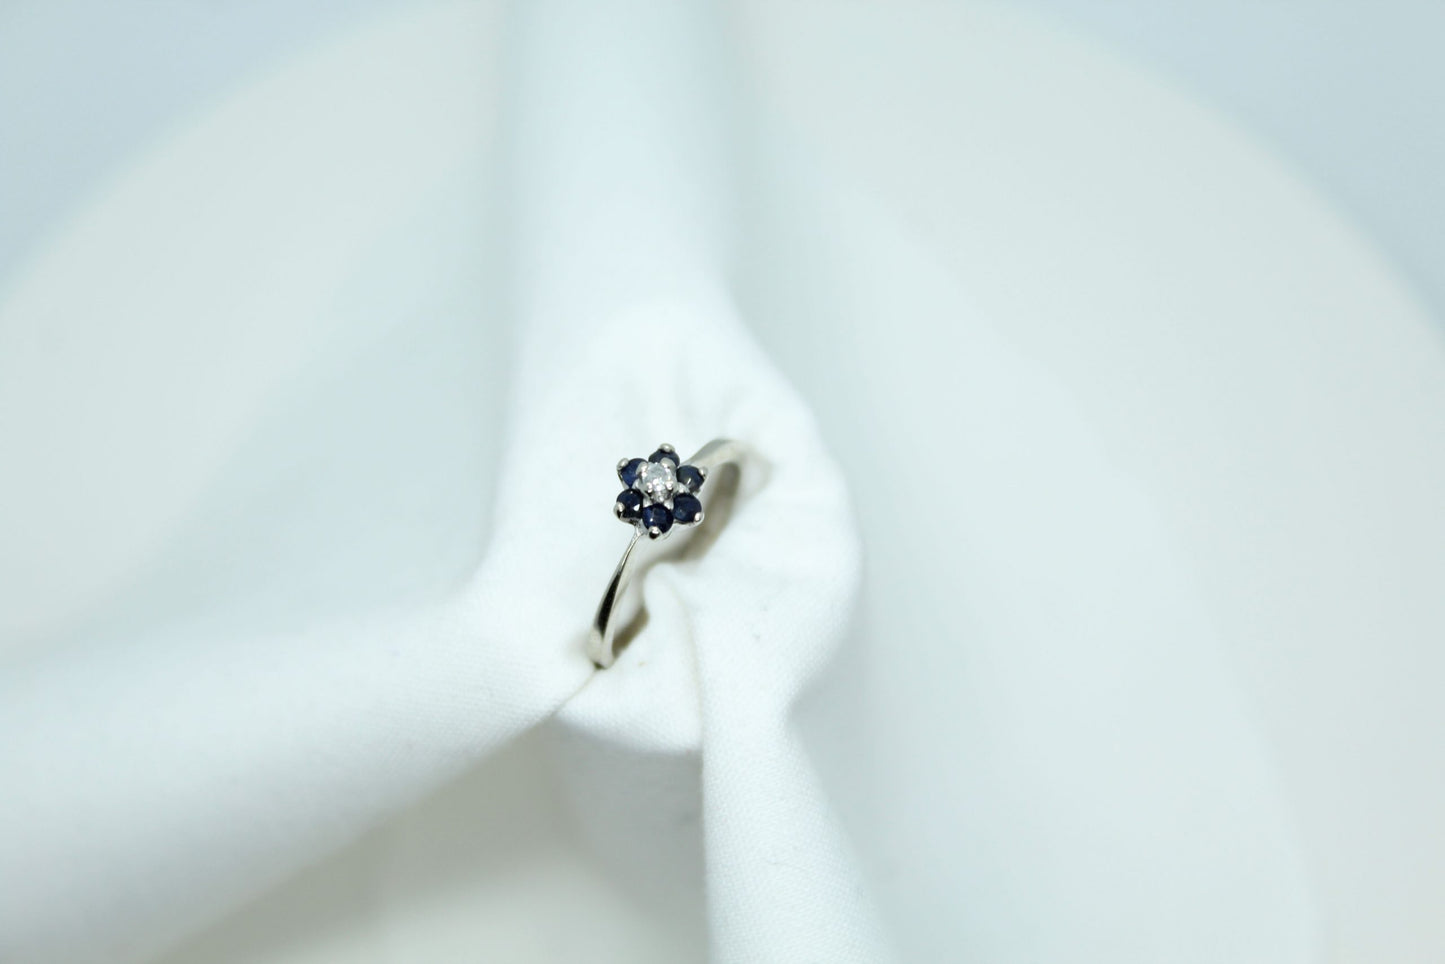 Sapphire/Diamond Flower Ring, .20CT SAPH .03CT DIA 10KT, white gold